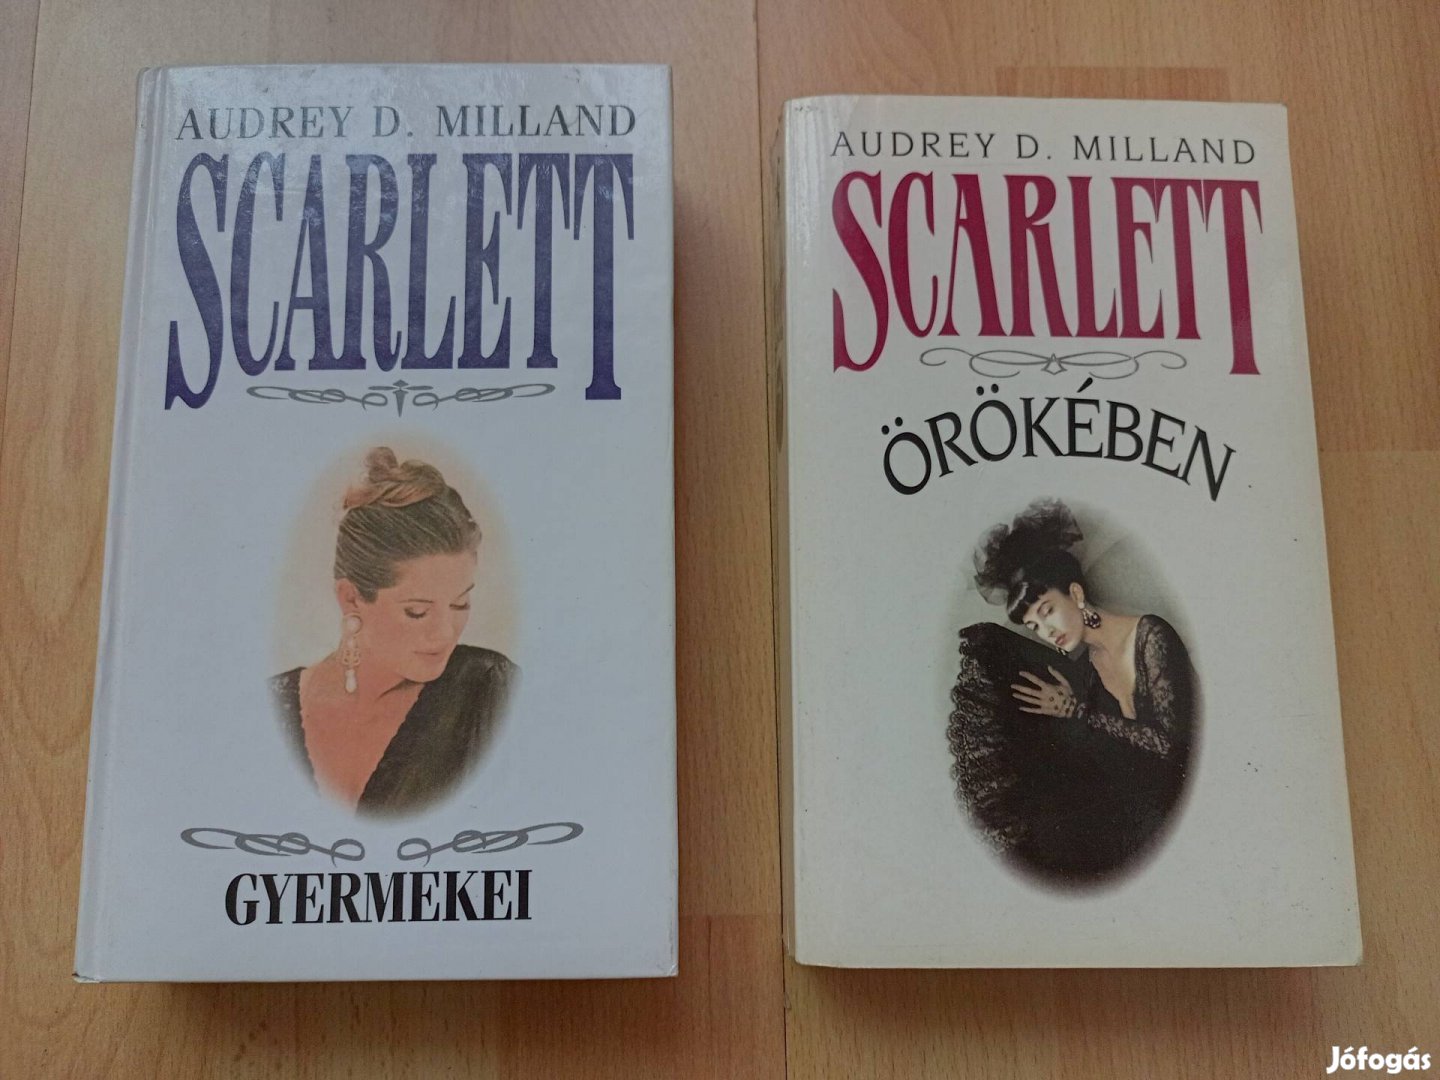 Audry D Milland - Scarlett